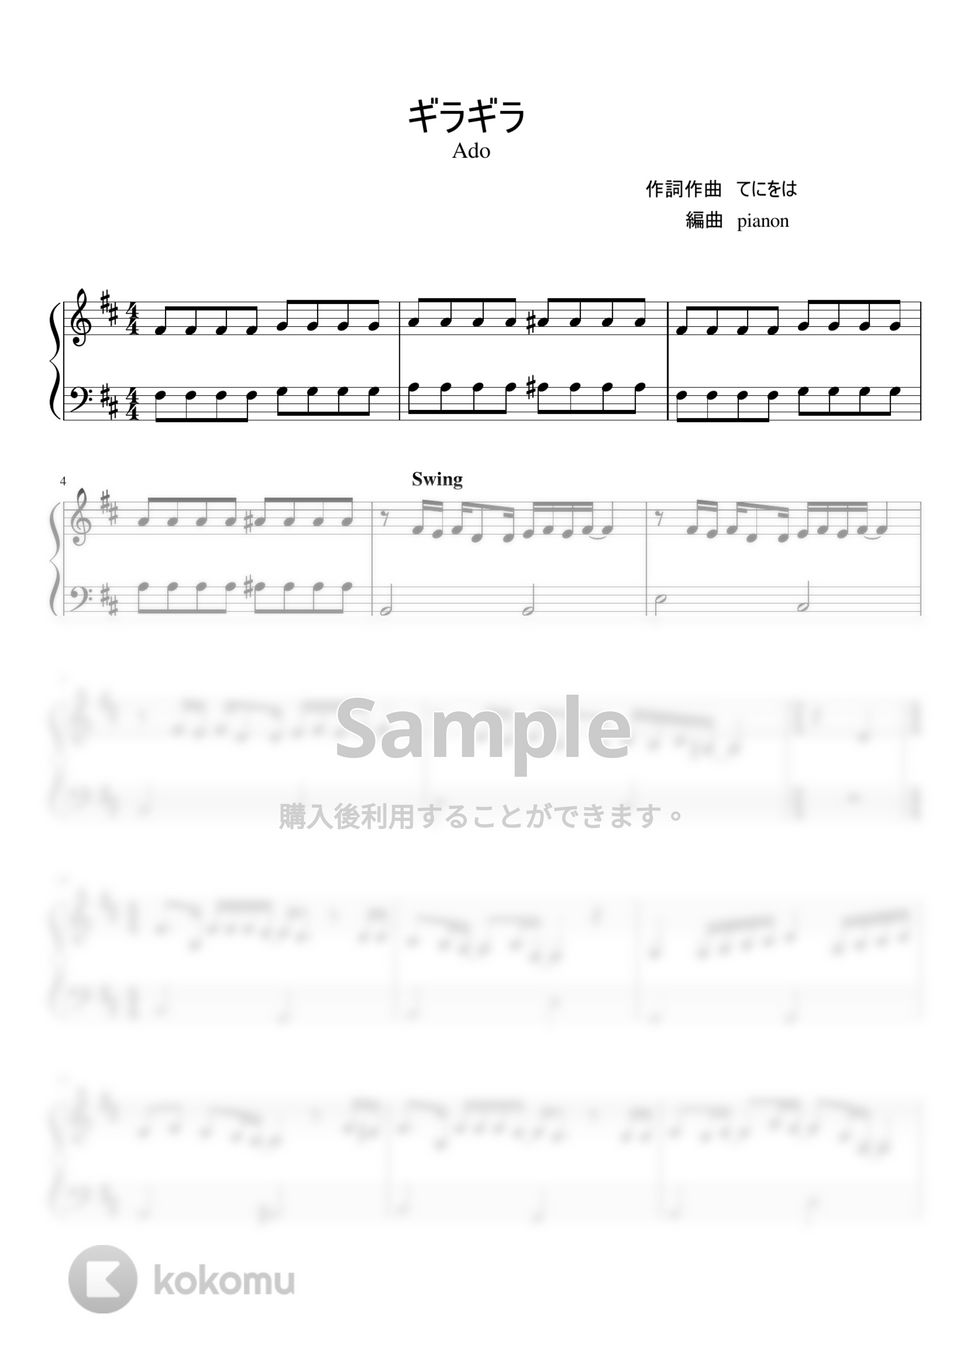 Ado - ギラギラ (ピアノソロ) by pianon